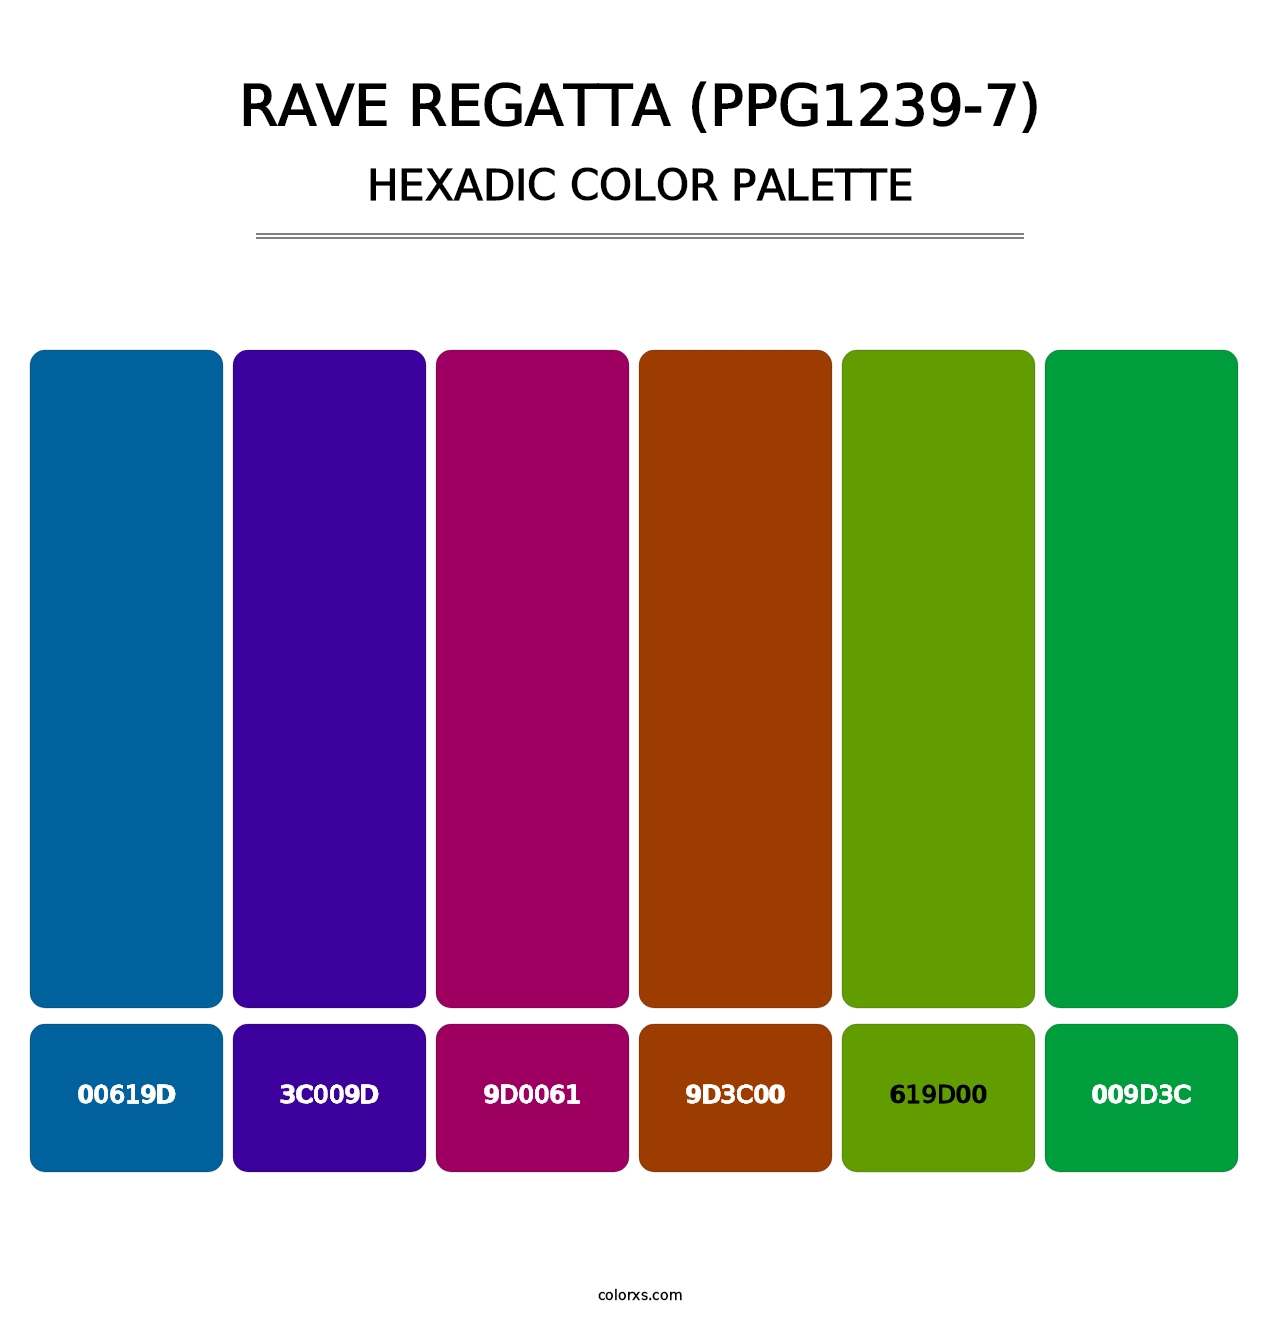 Rave Regatta (PPG1239-7) - Hexadic Color Palette